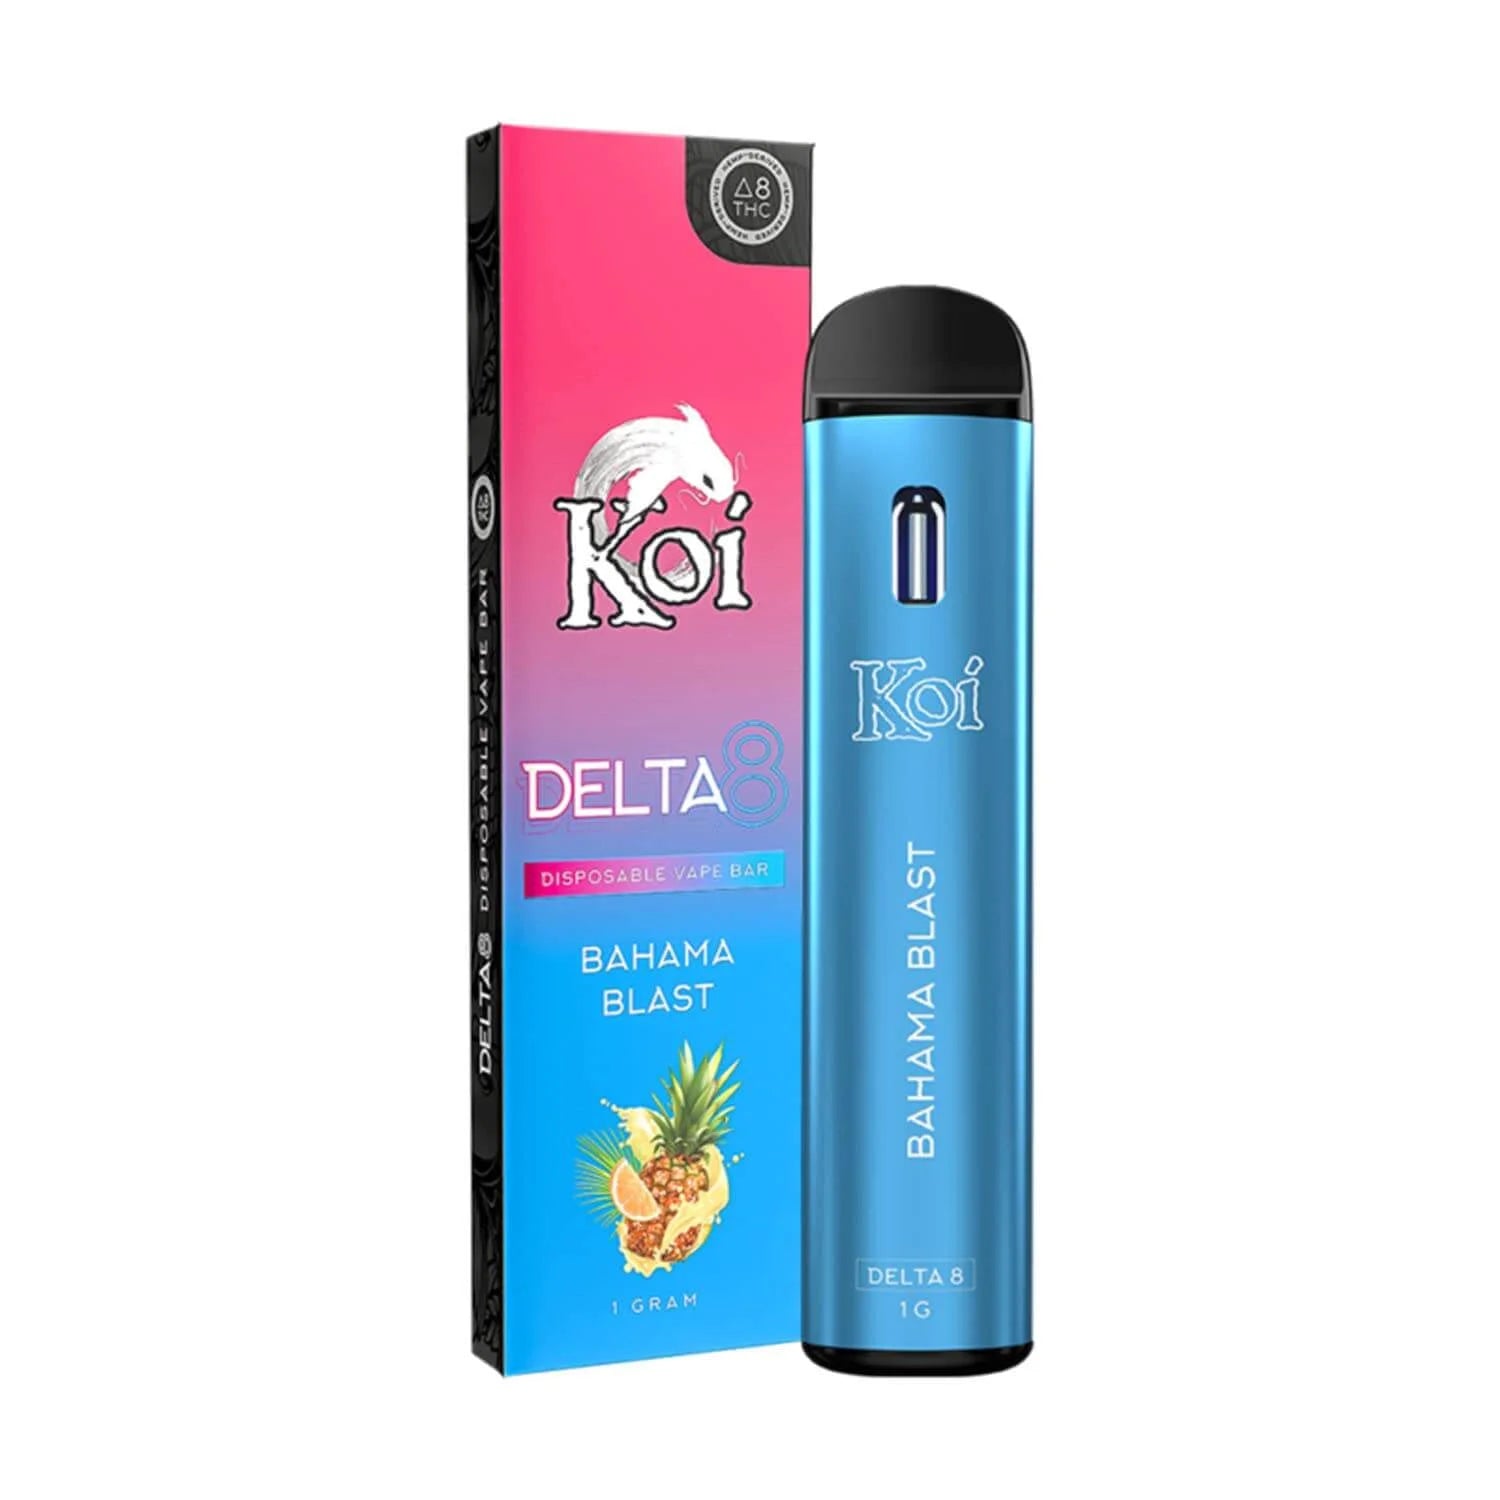 Koi Bahama Blast Delta 8 Disposable Vape Bar (1g) Best Price